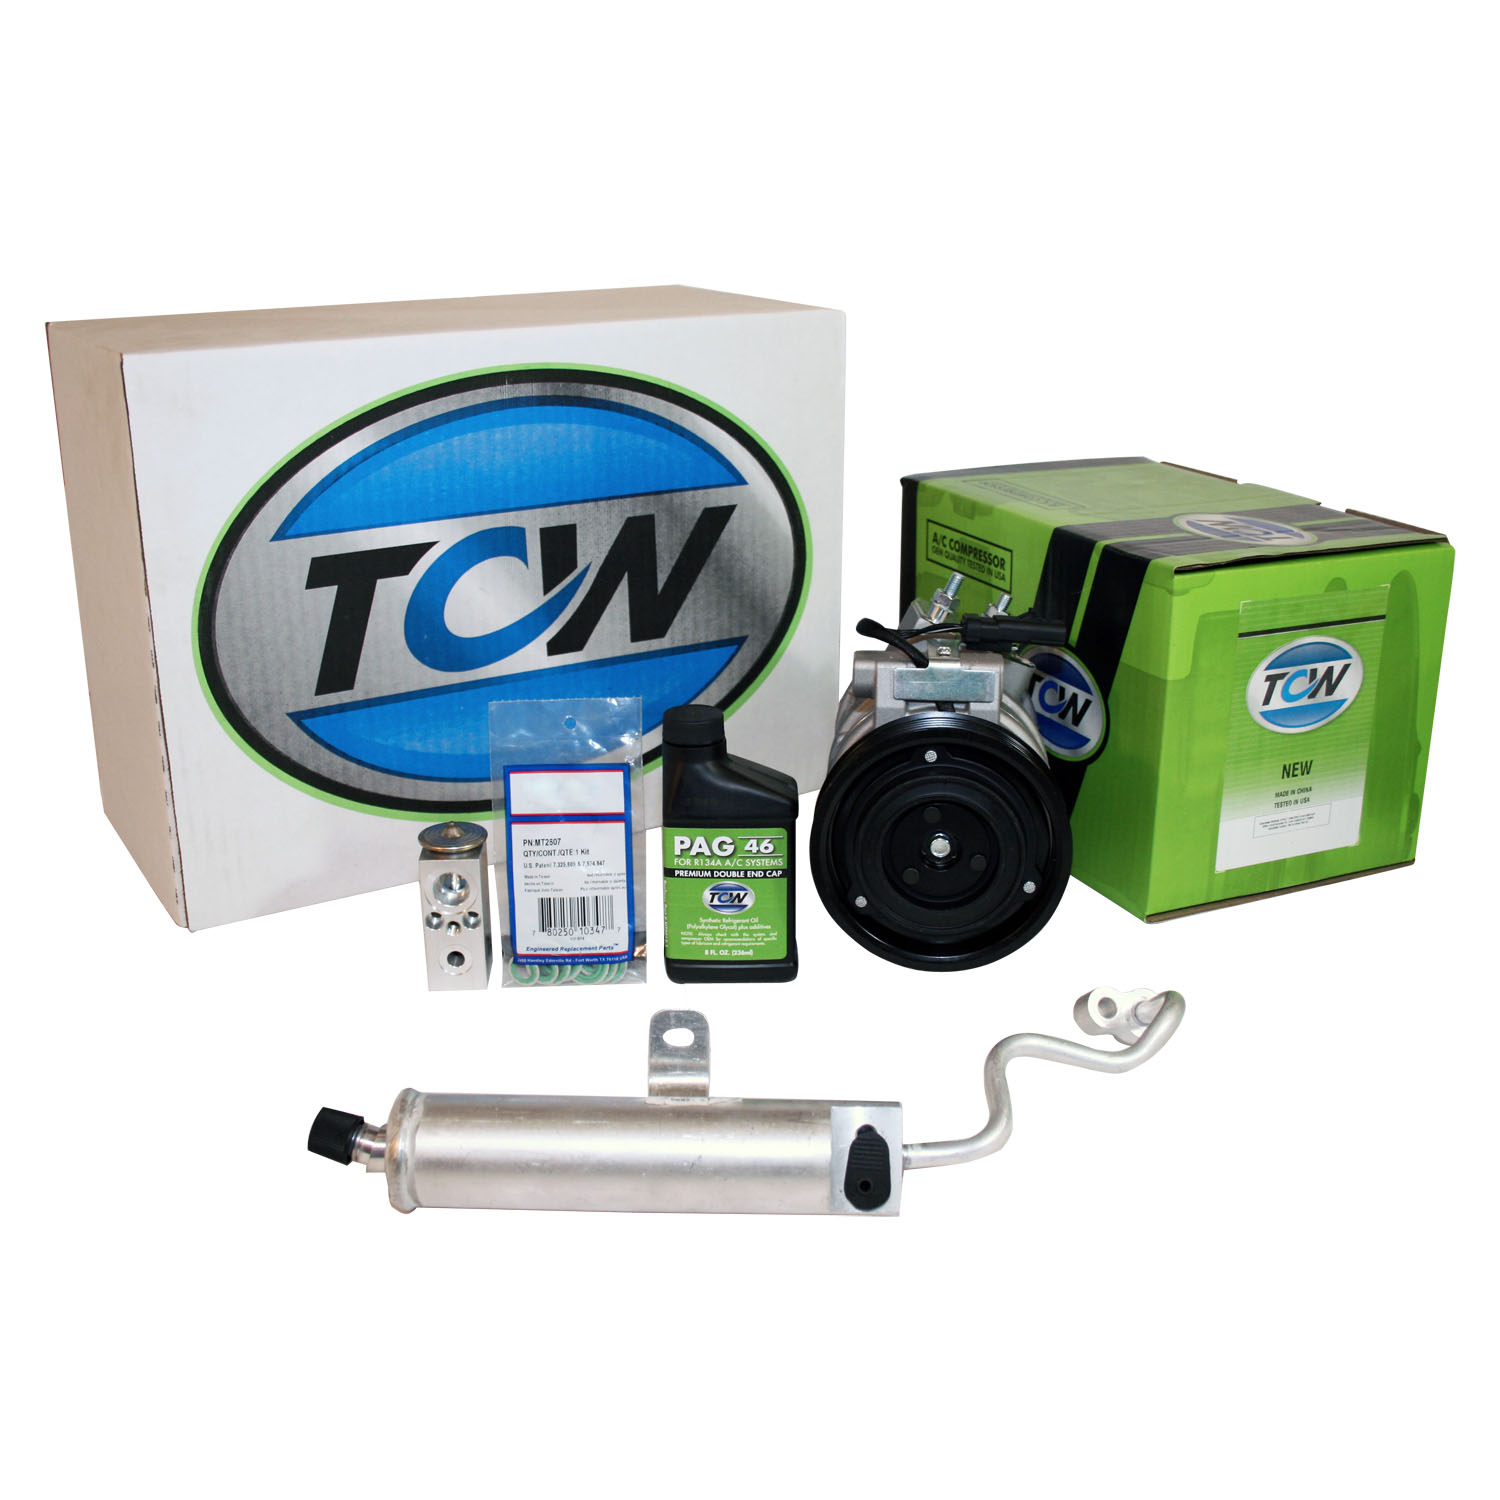 TCW Vehicle A/C Kit K1000452N New